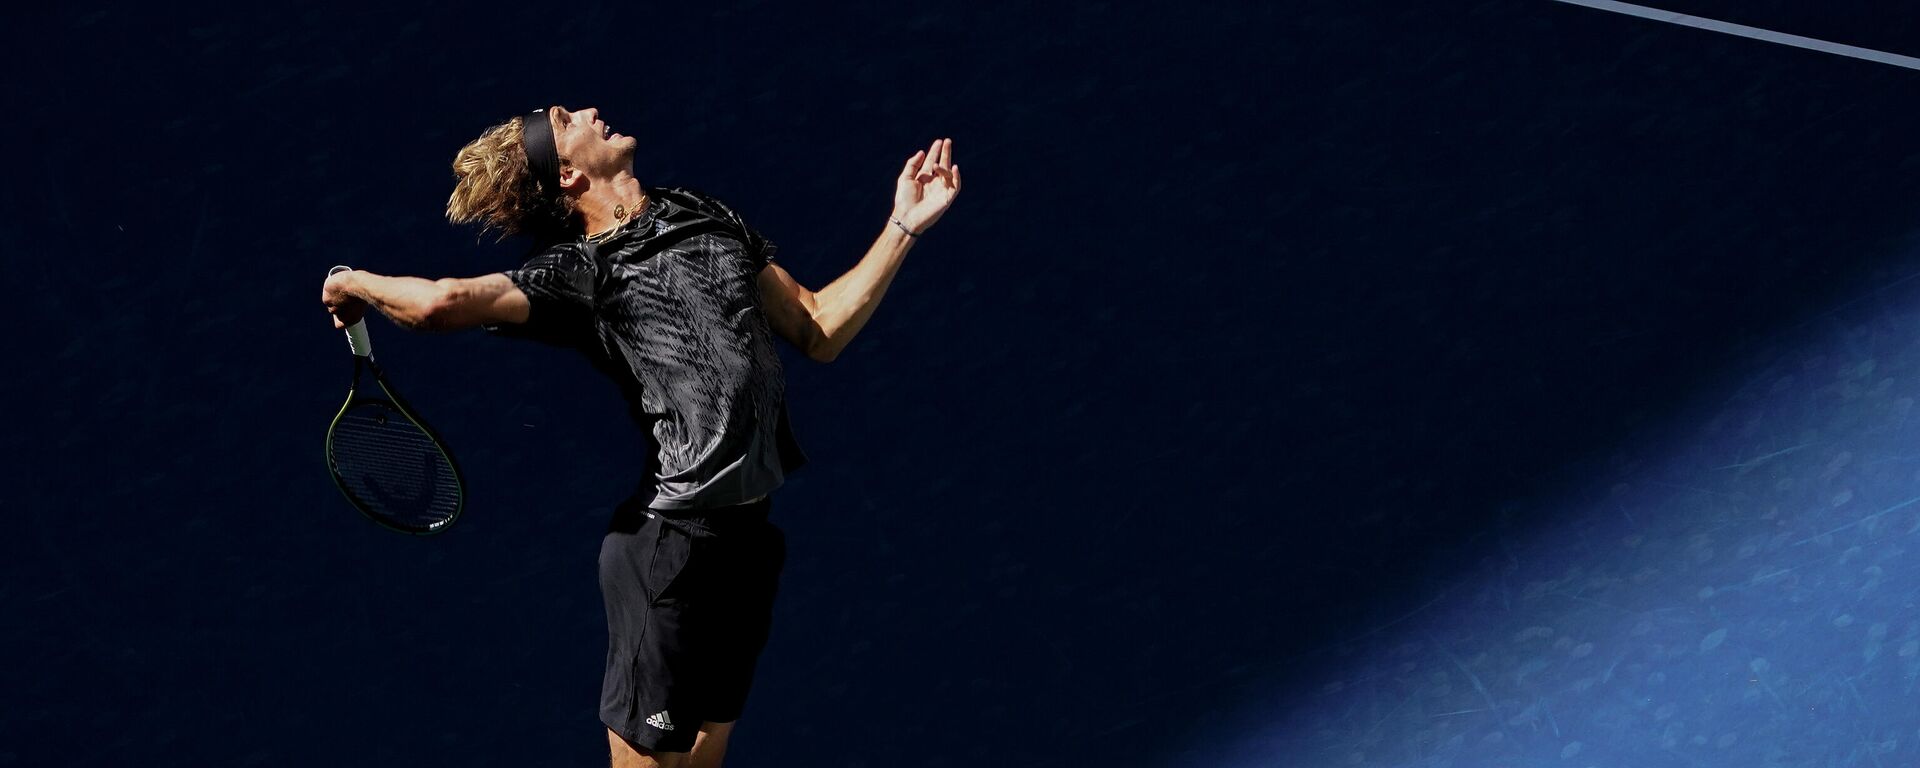 Nemački teniser Aleksander Zverev na US openu 2021. - Sputnik Srbija, 1920, 02.09.2021